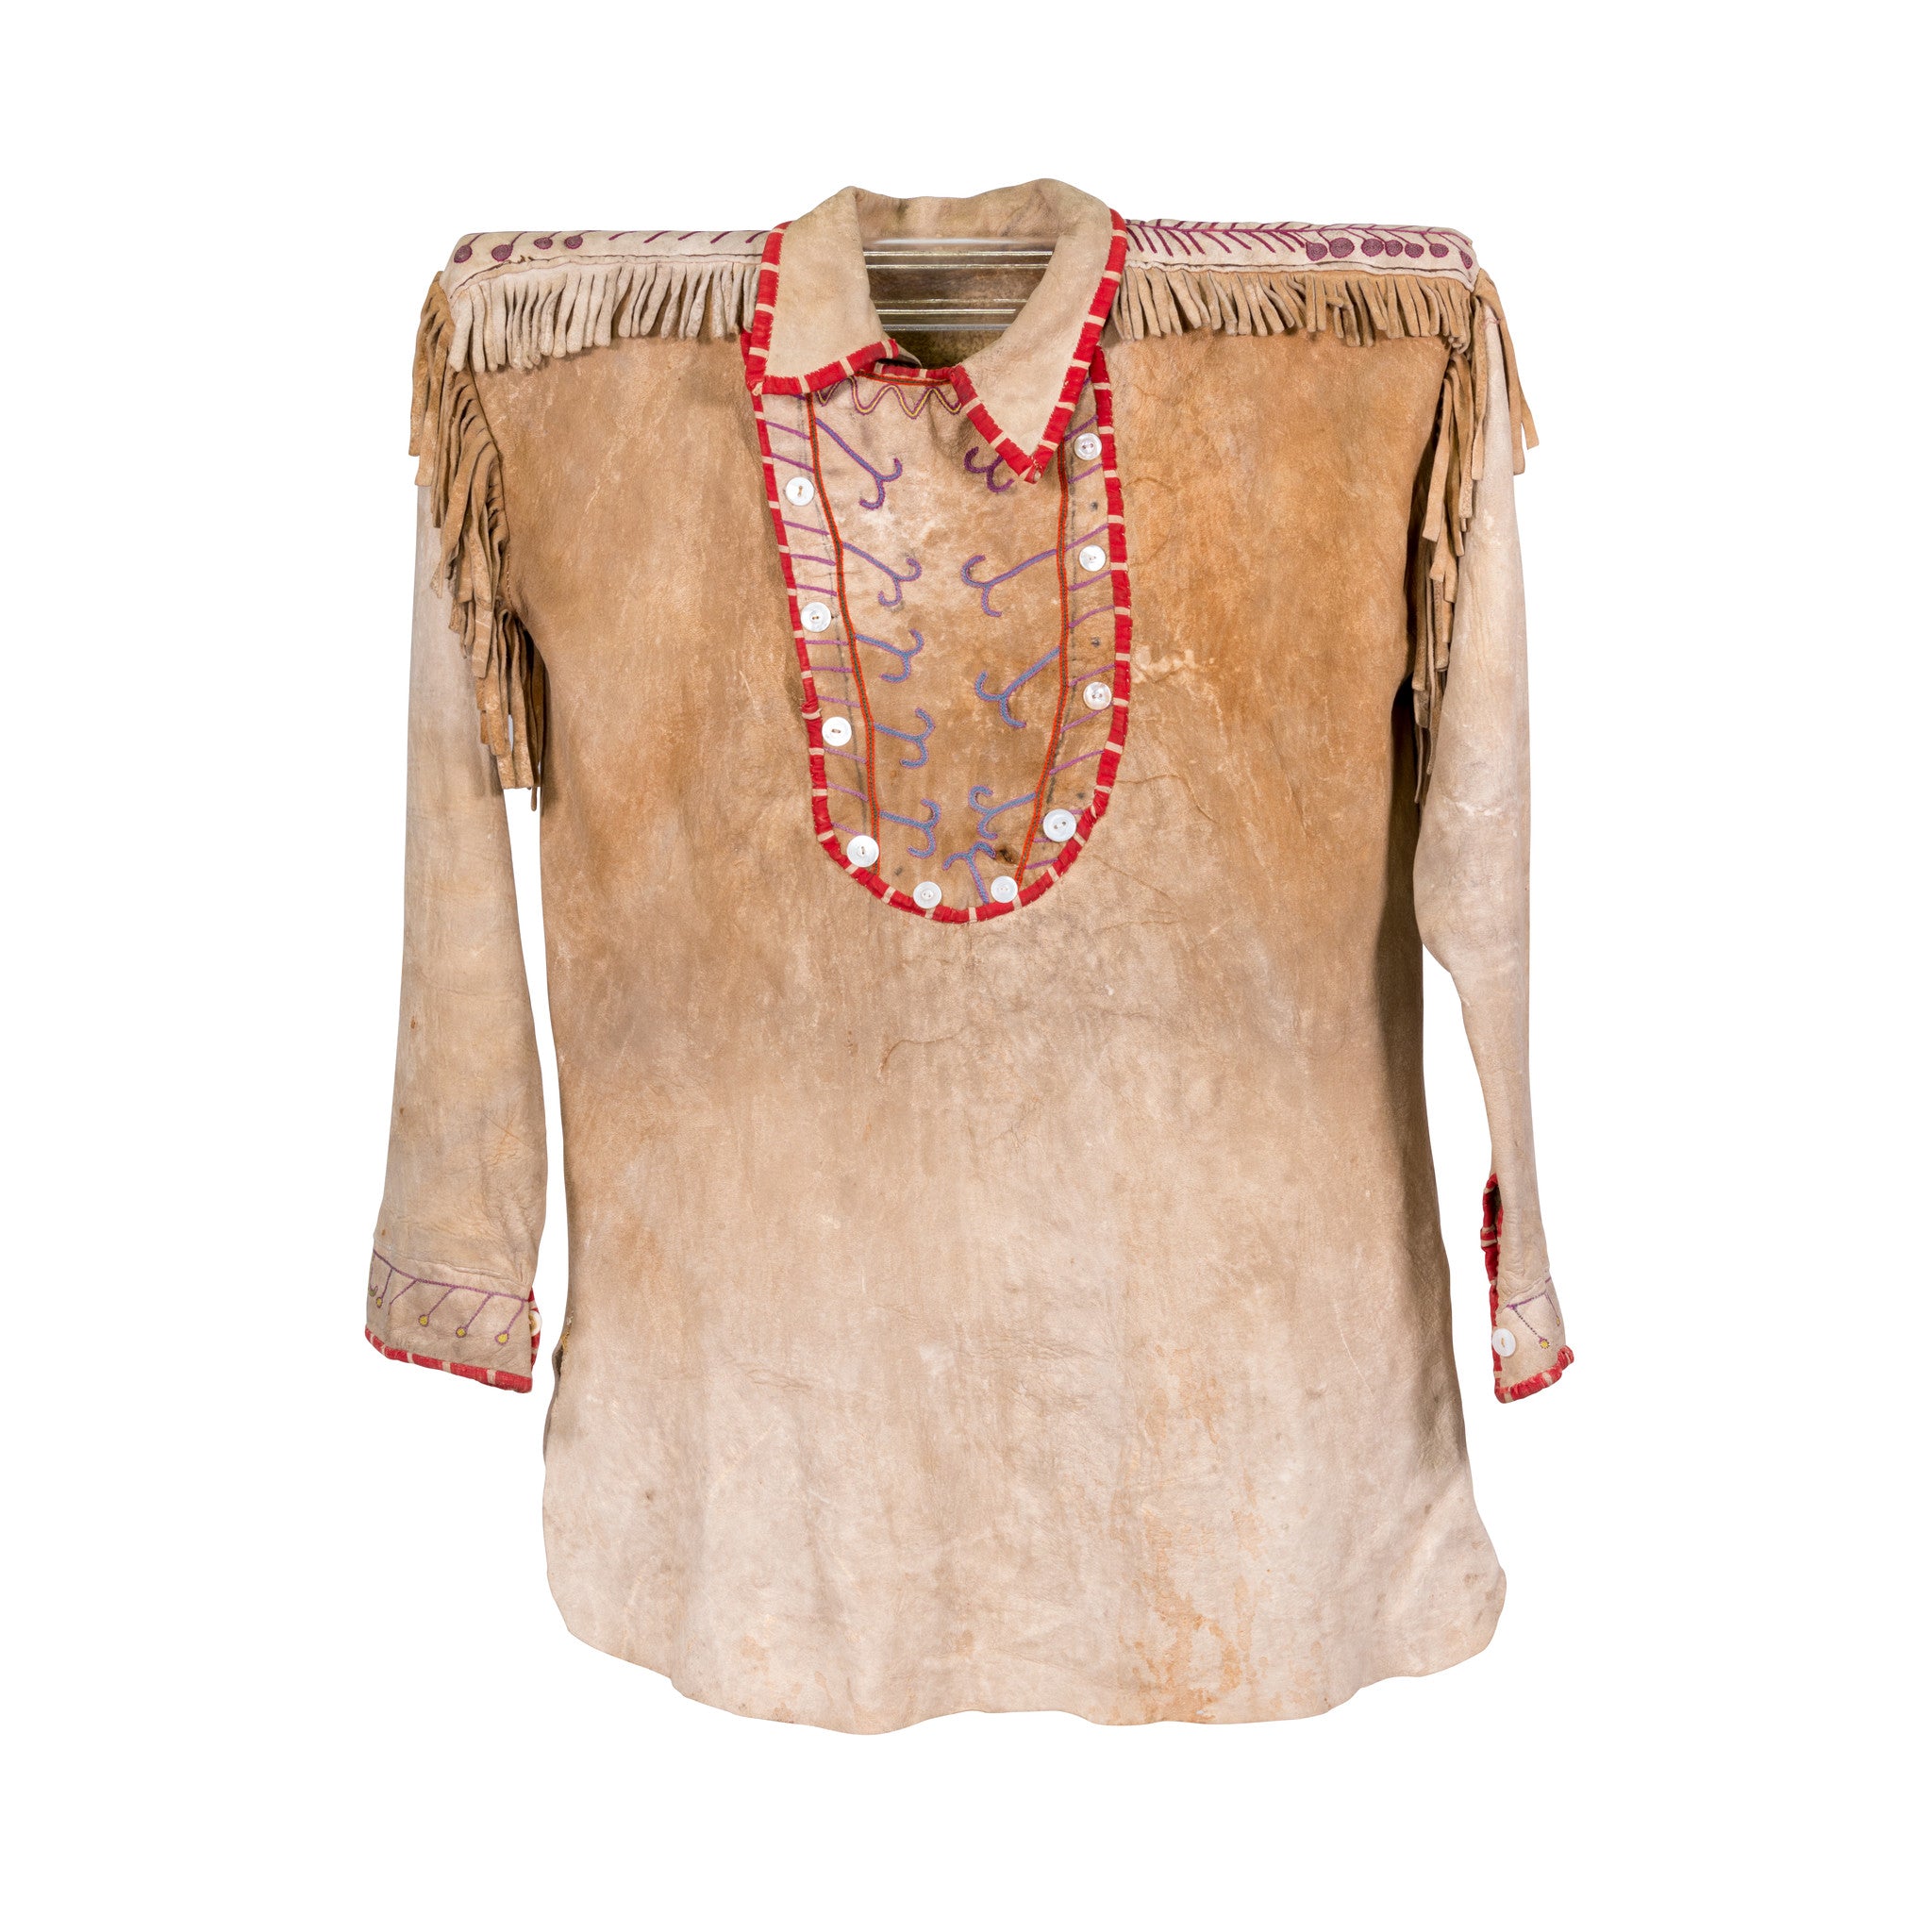 Cree Scout Shirt, Native, Garment, Shirt